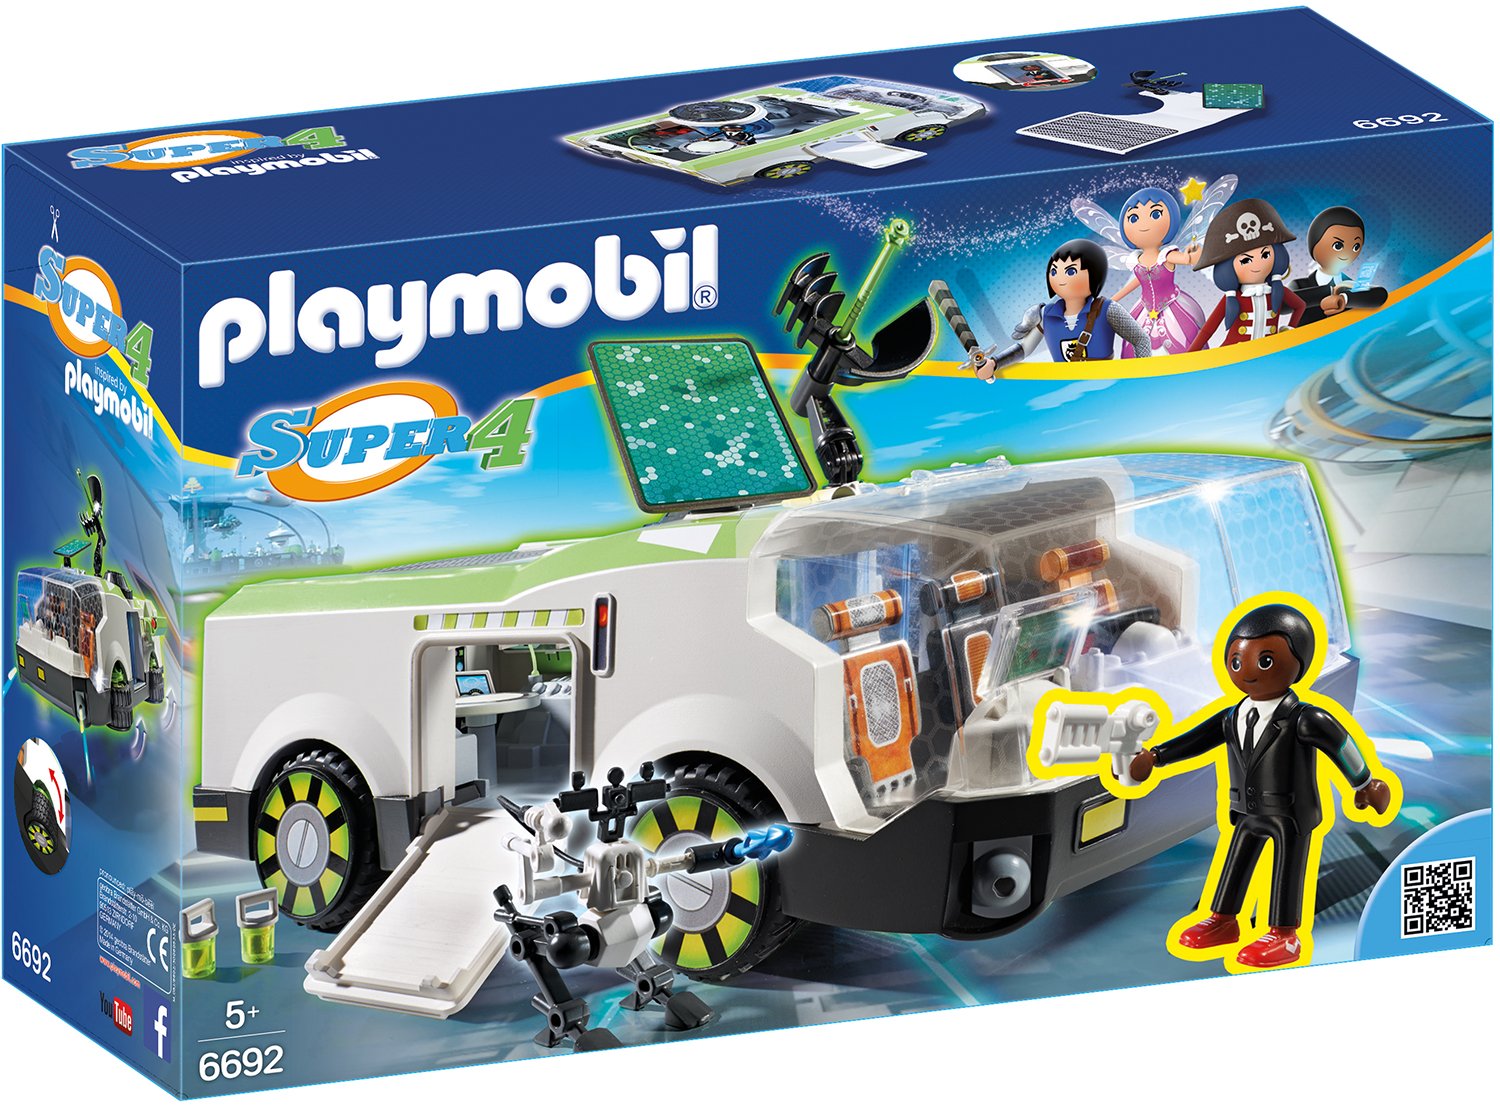 Playmobil Super Technopolis Chameleon Vehicle